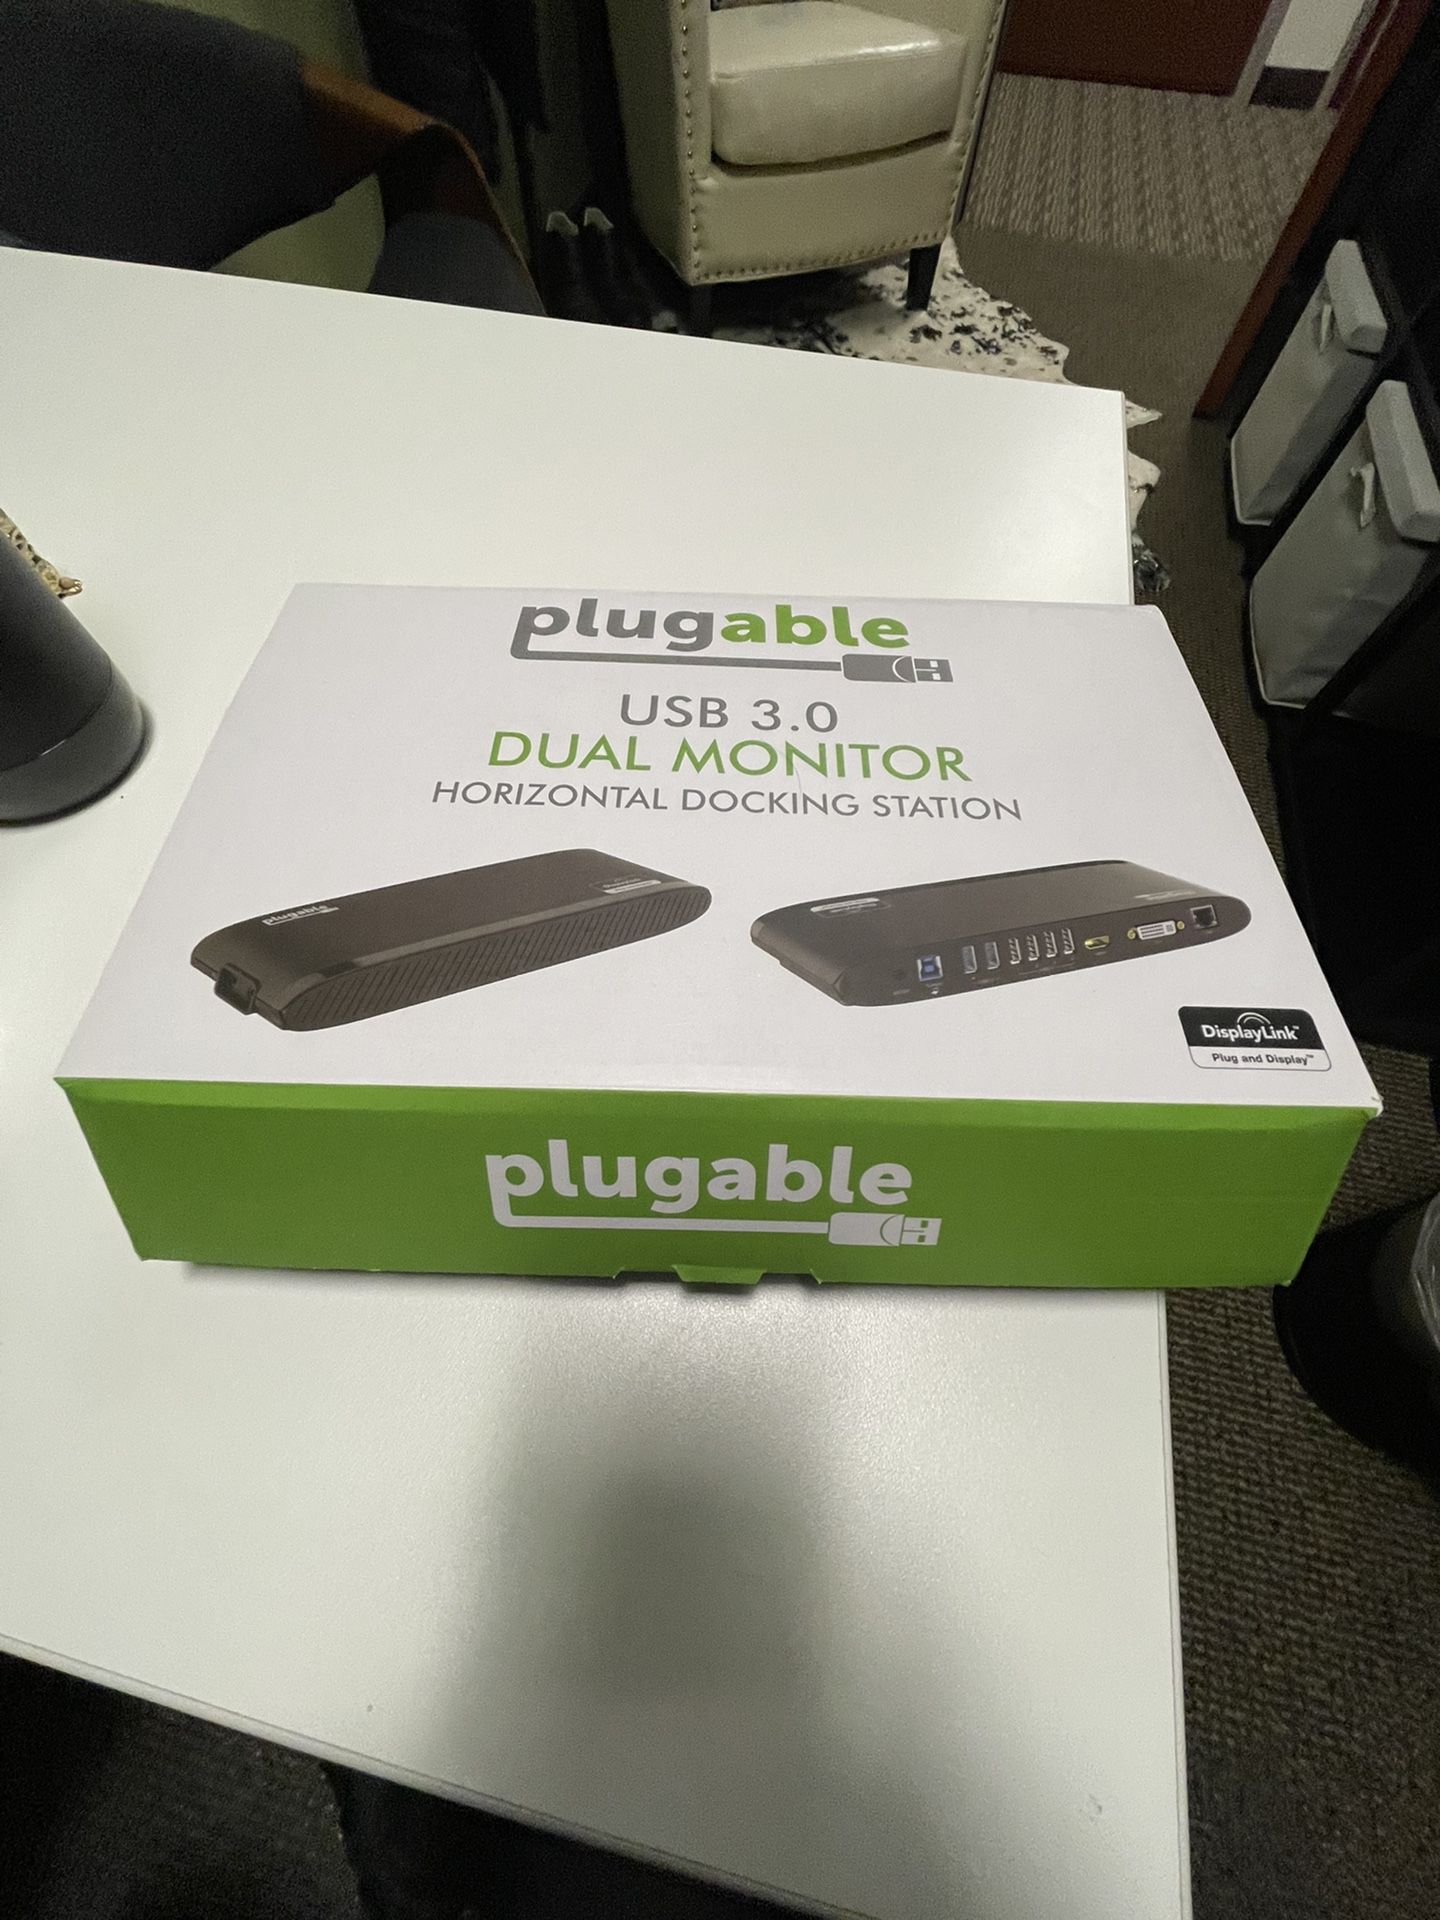 Plugable USB 3.0 Dual Monitor Horizontal Docking Station